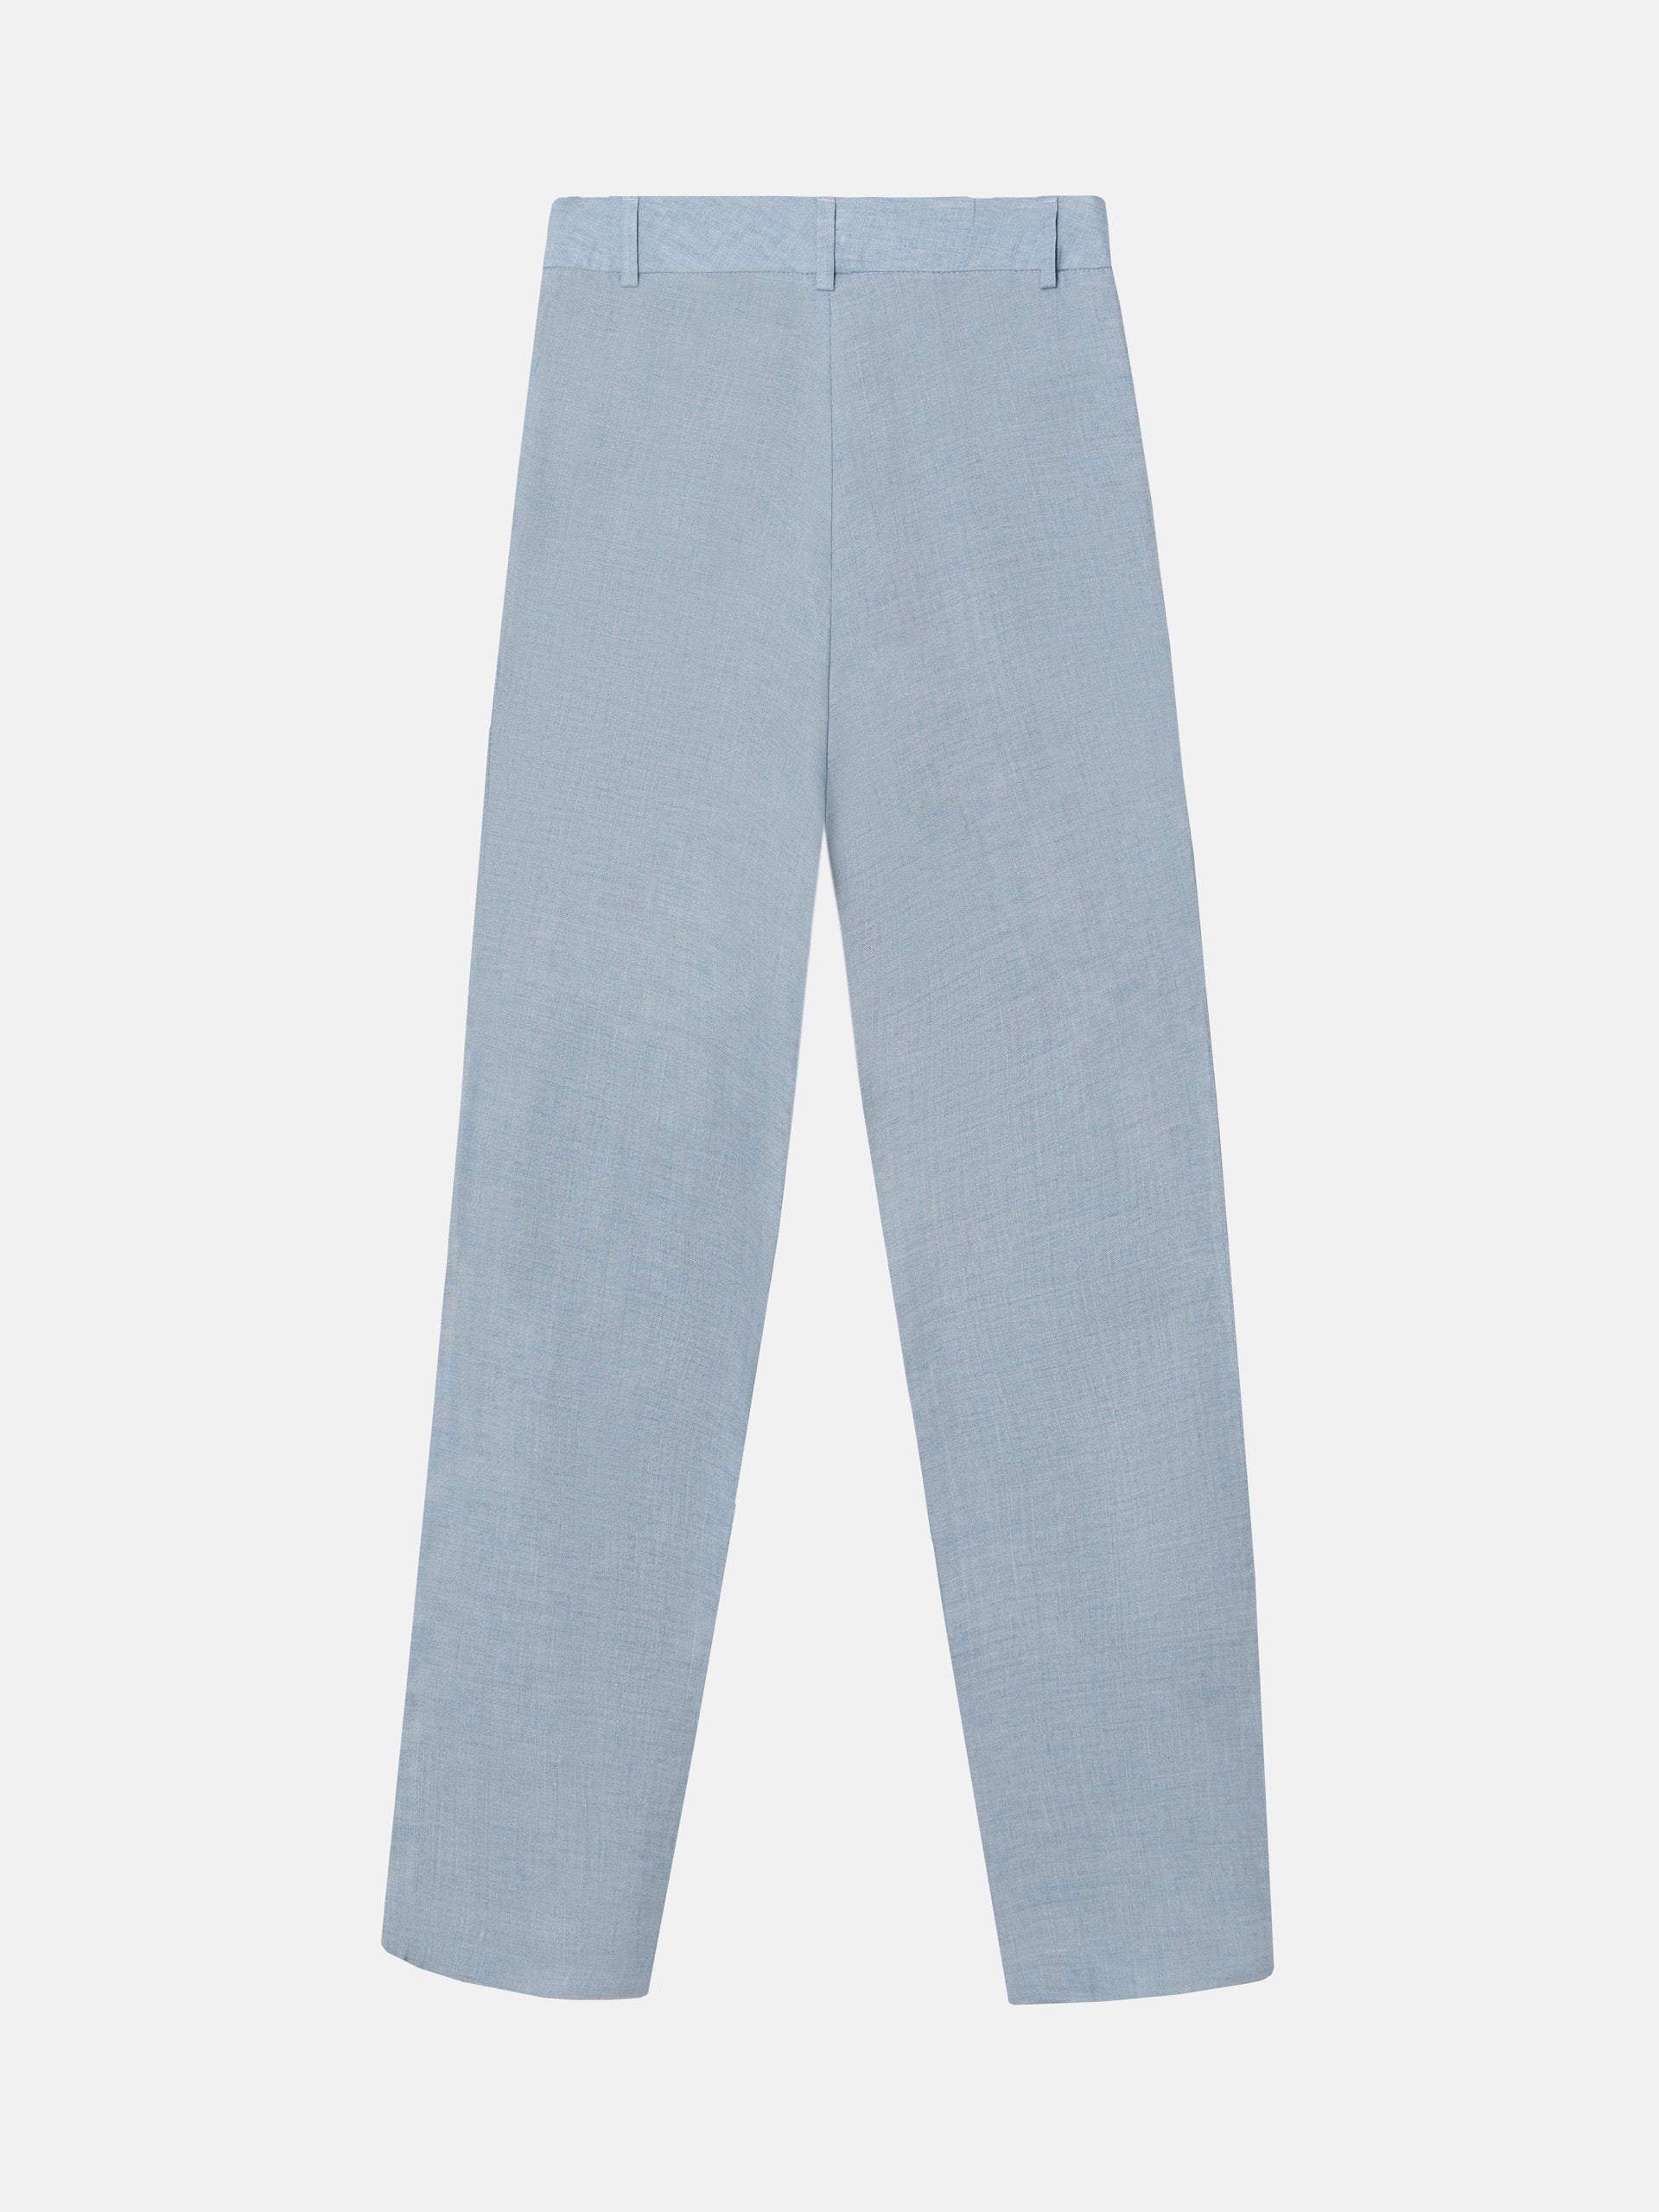 Women's blue denim dress pants